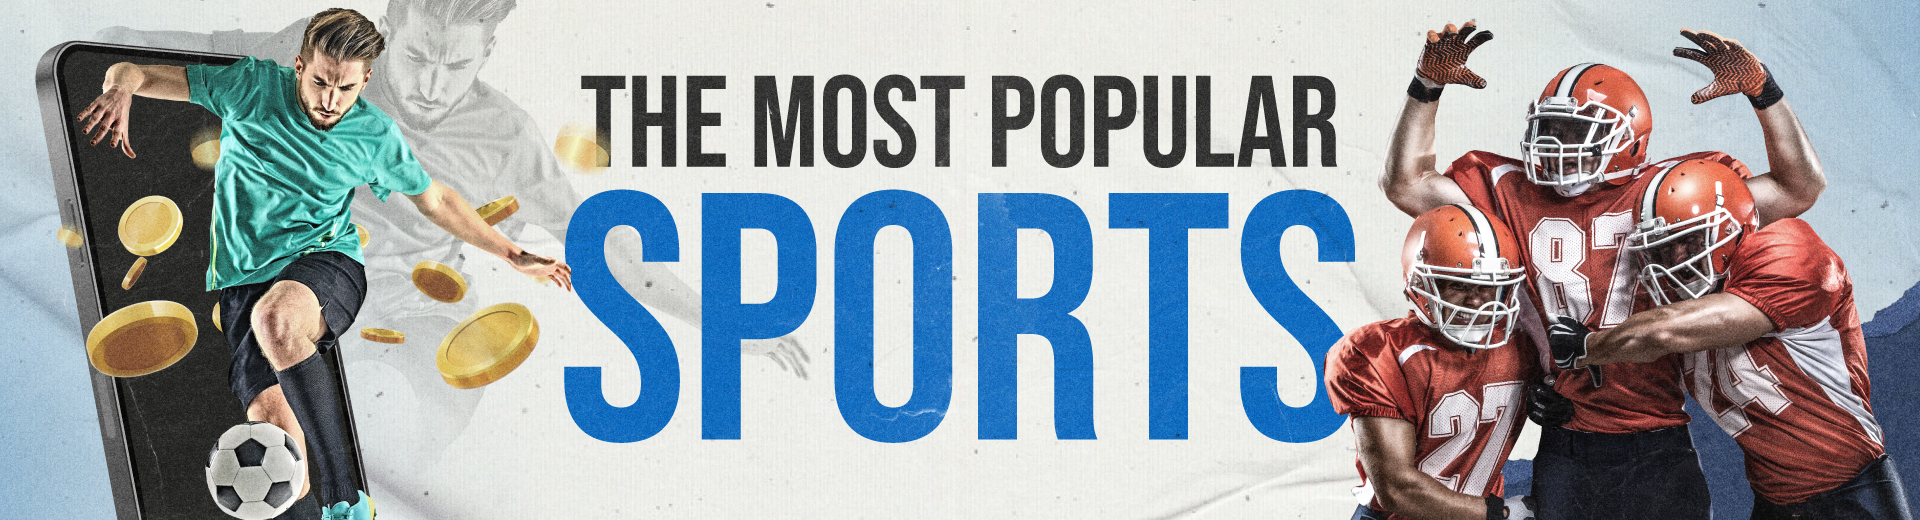 Bets on The Most Popular Sports Using the OKBET App - OKBET sportsbooks